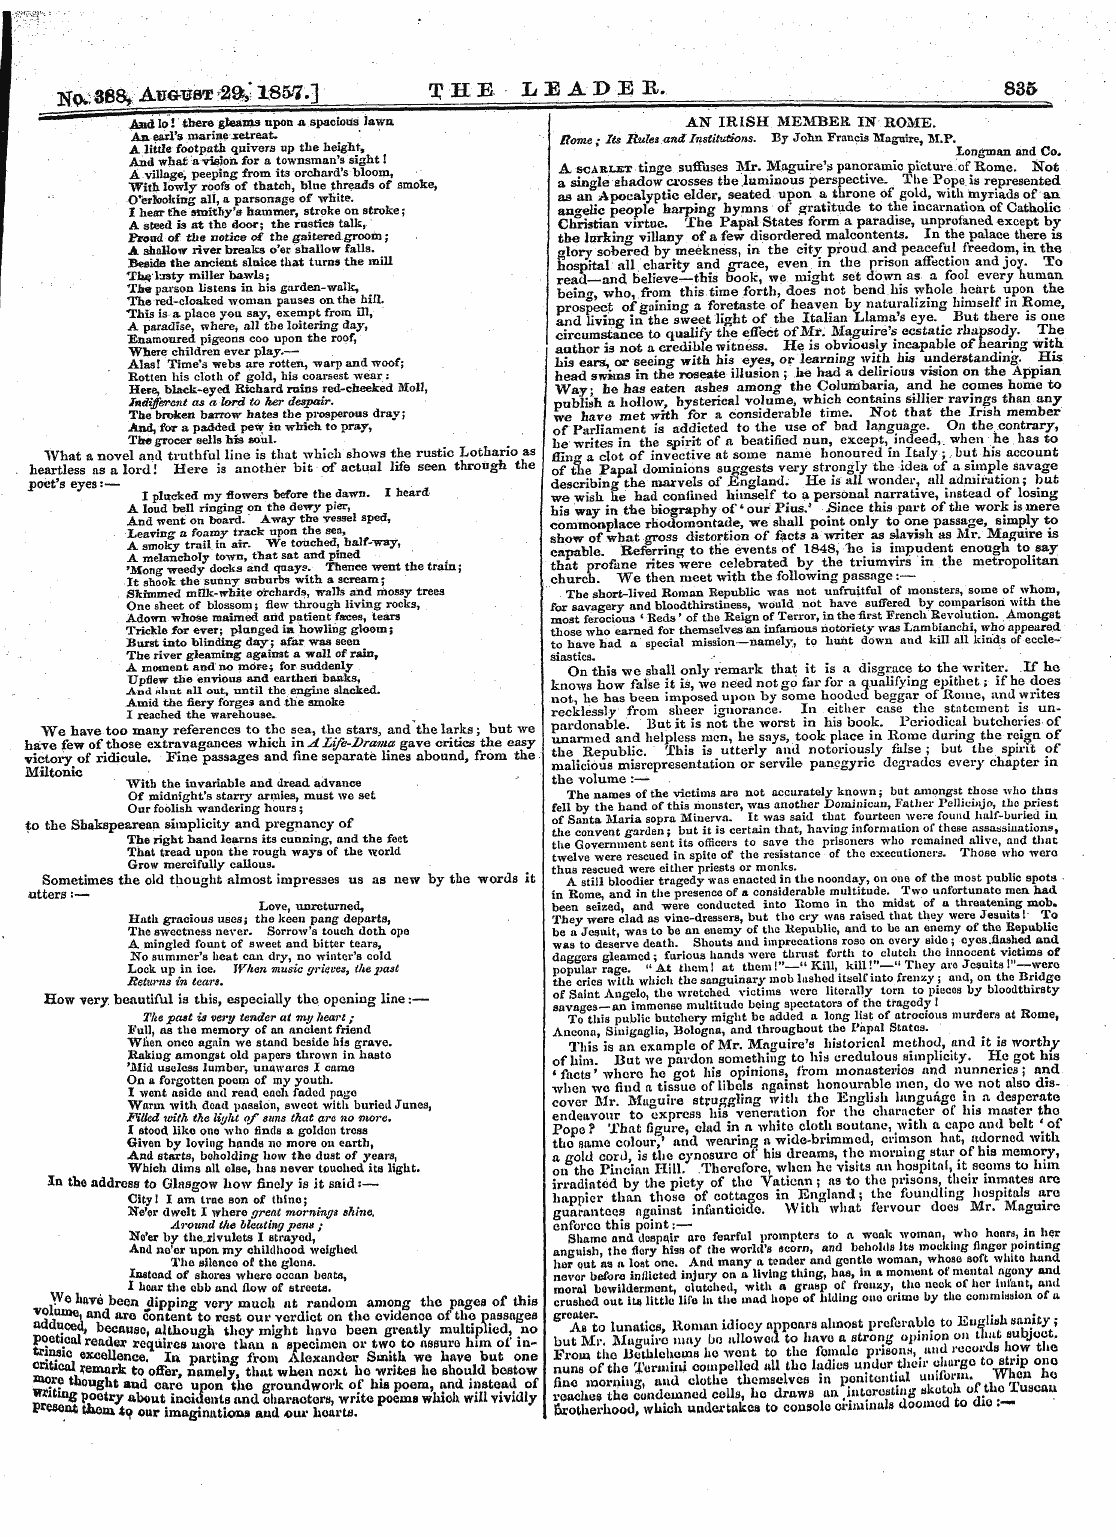 Leader (1850-1860): jS F Y, 2nd edition - Tsro^B88. Ahg^8t^165^.] The Leader, 835